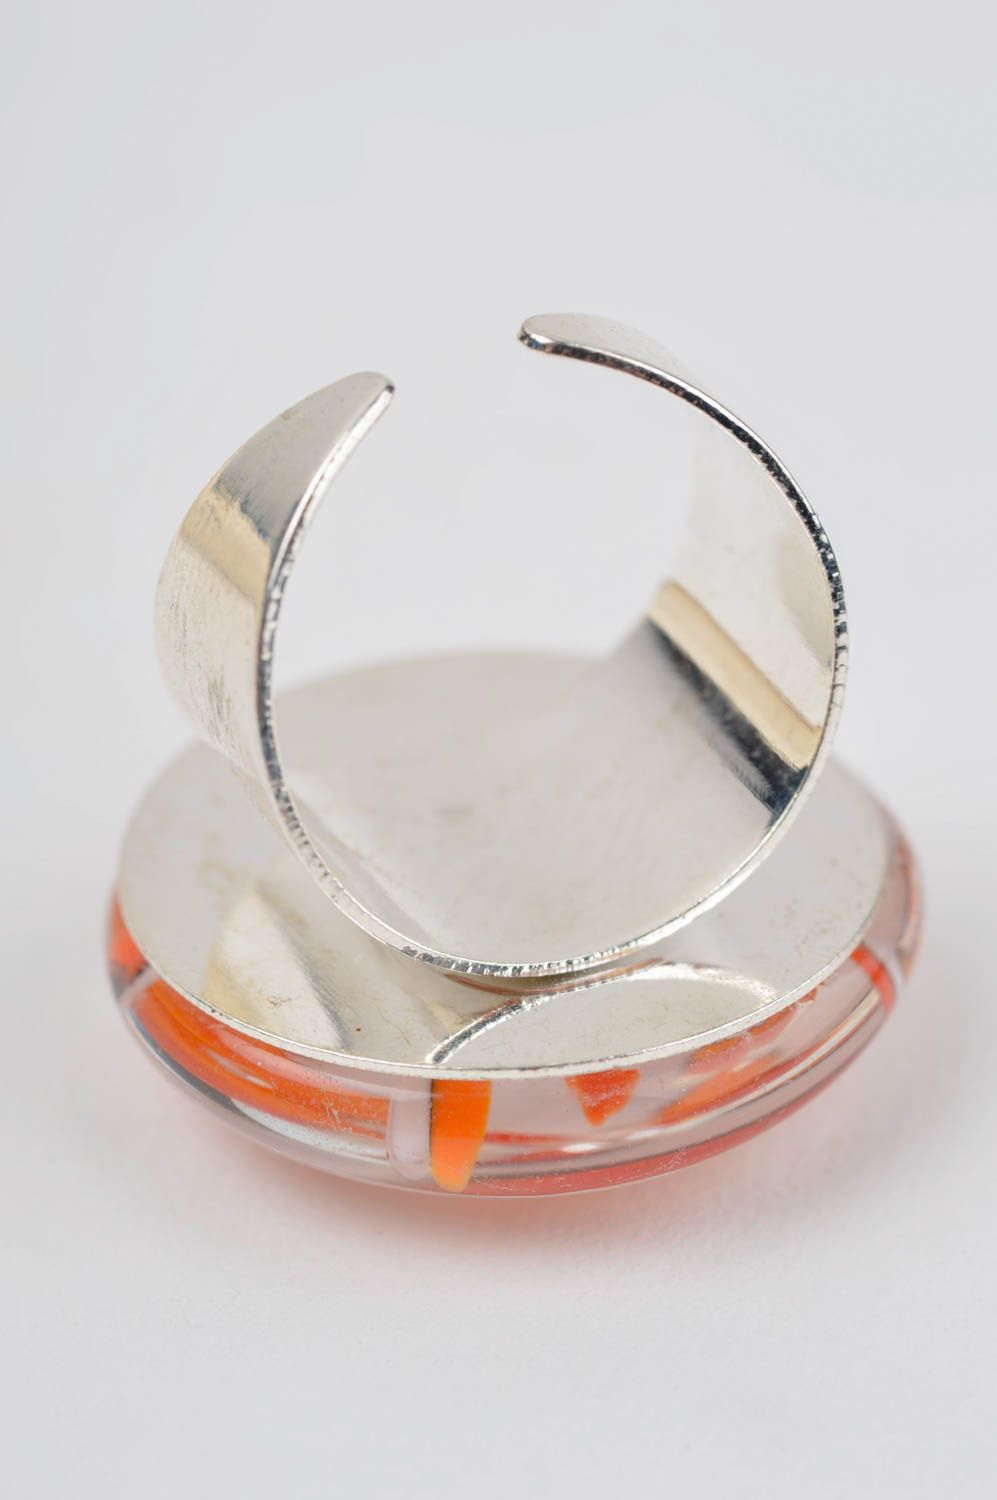 Beautiful handmade glass ring design artisan jewelry glass art gifts for her photo 3